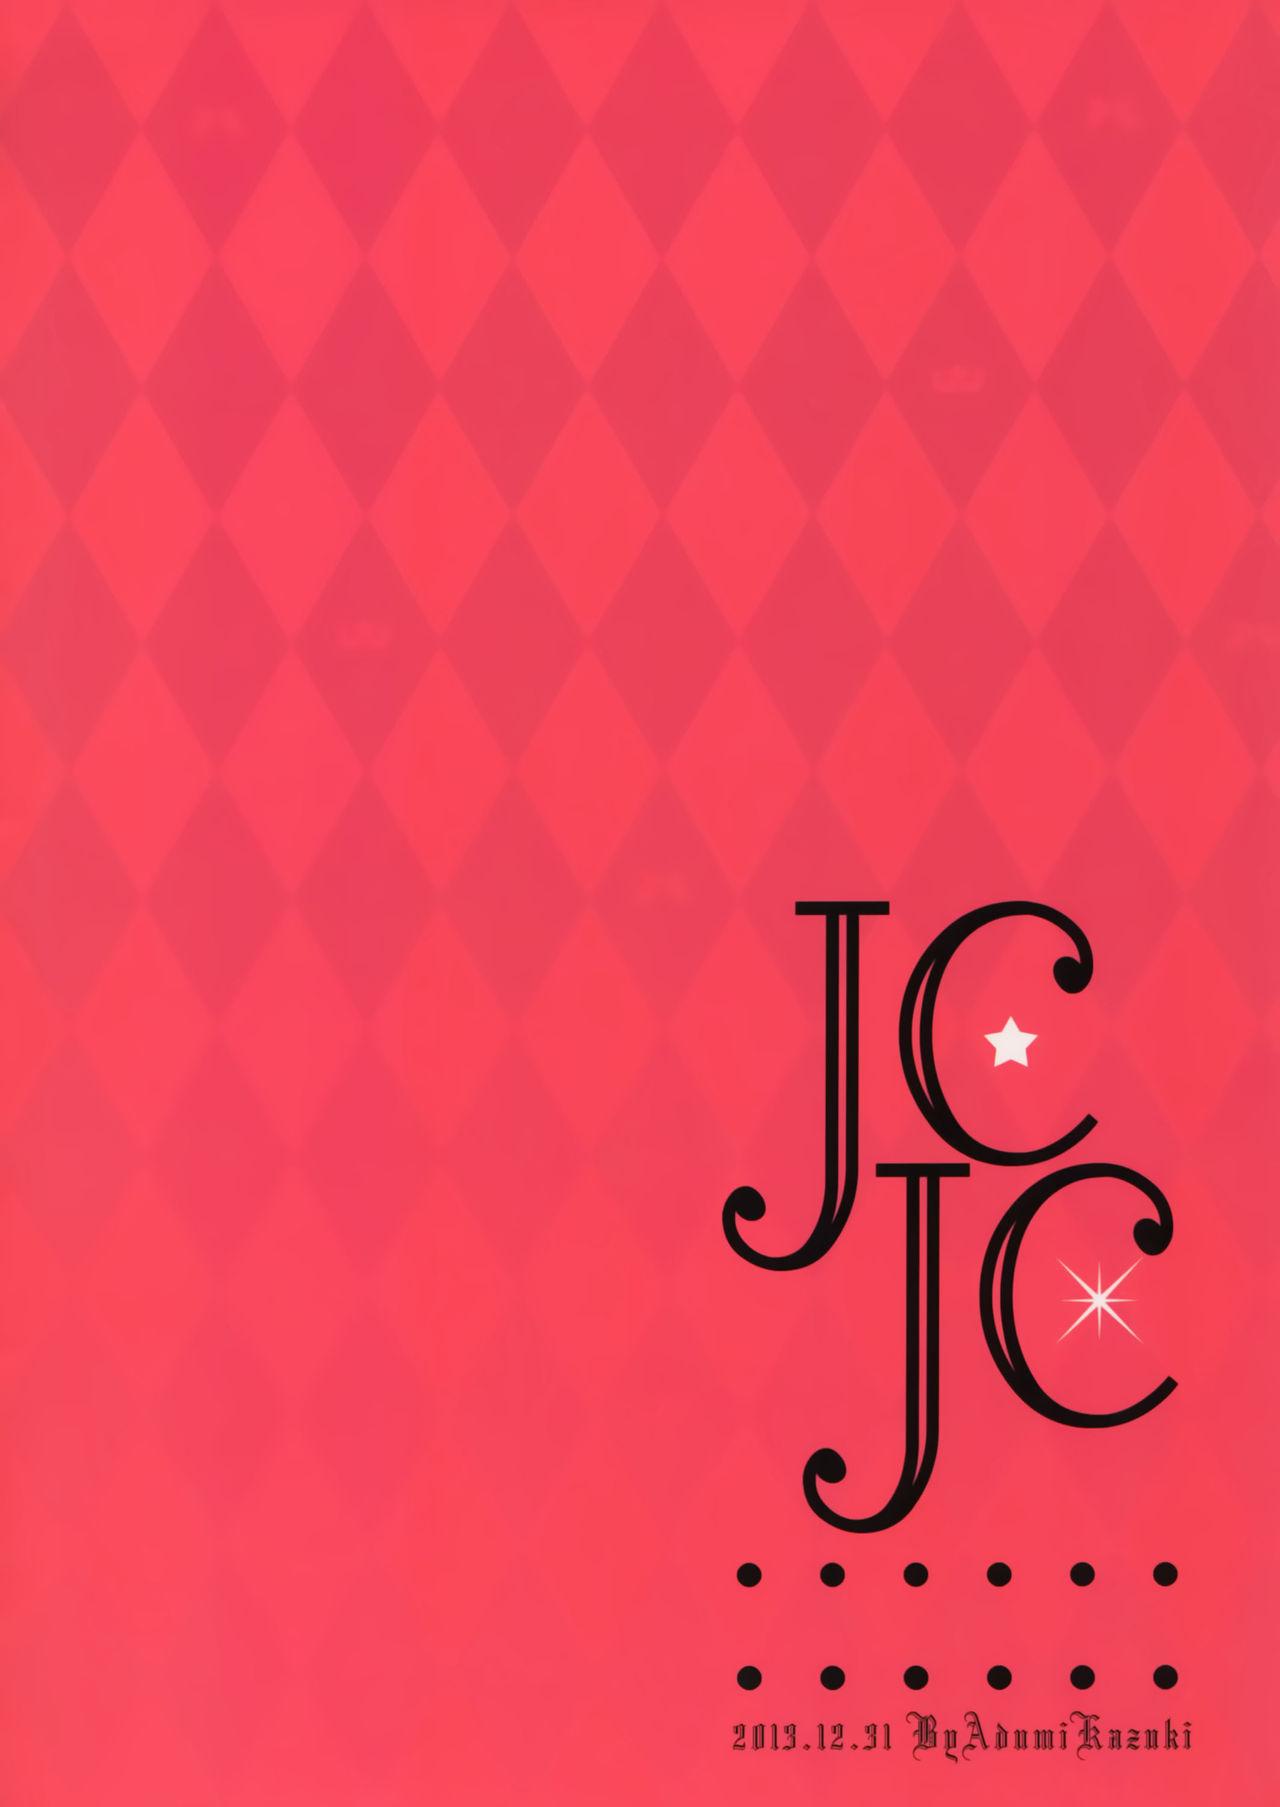 JCJC 14